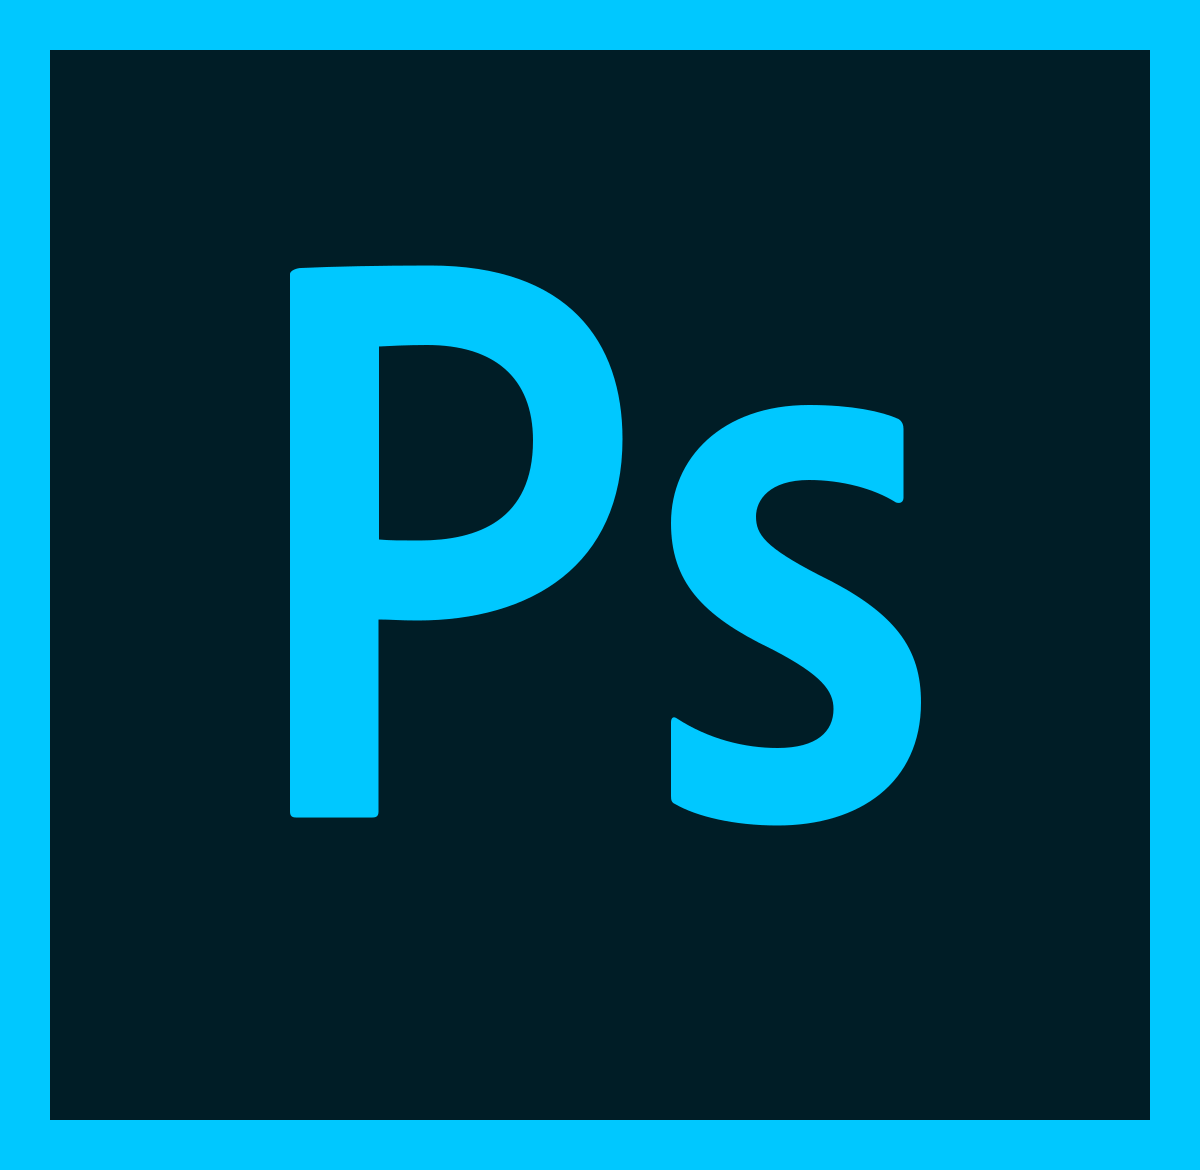 Adobe photoshop cc 2015 crack download